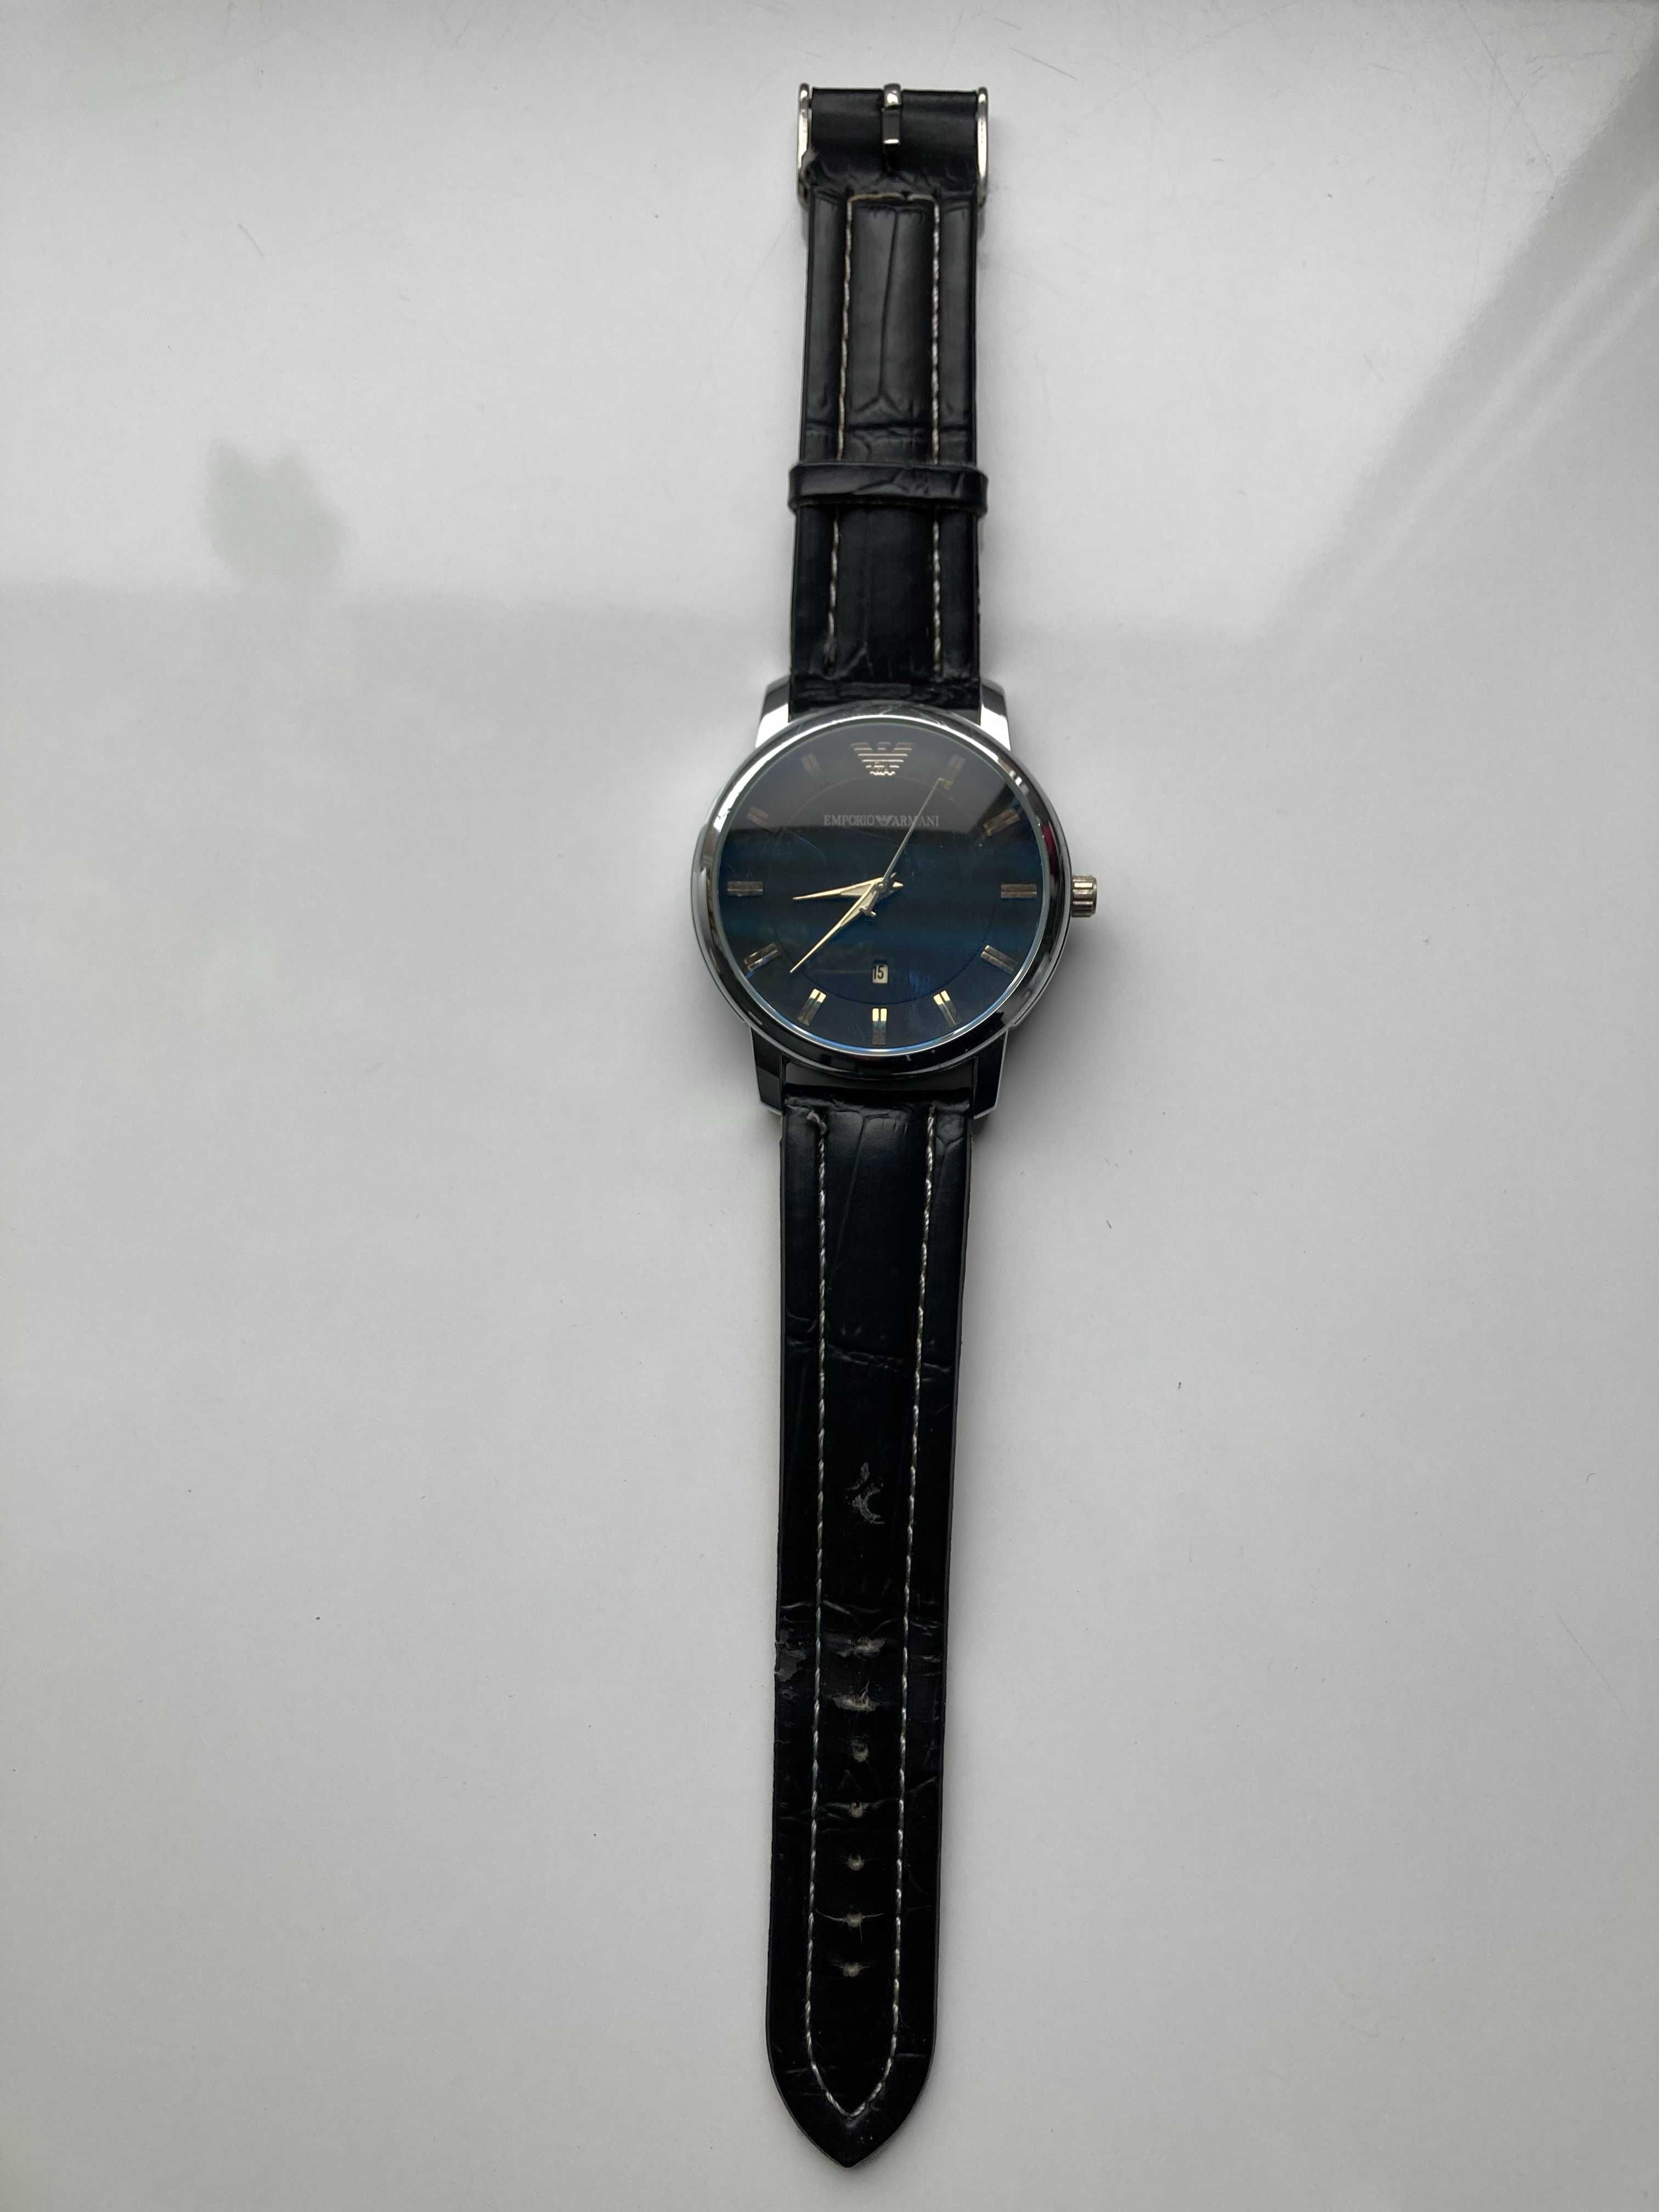 Emporio Armani męski czarny zegarek klasyczny elegancki skórzany pasek